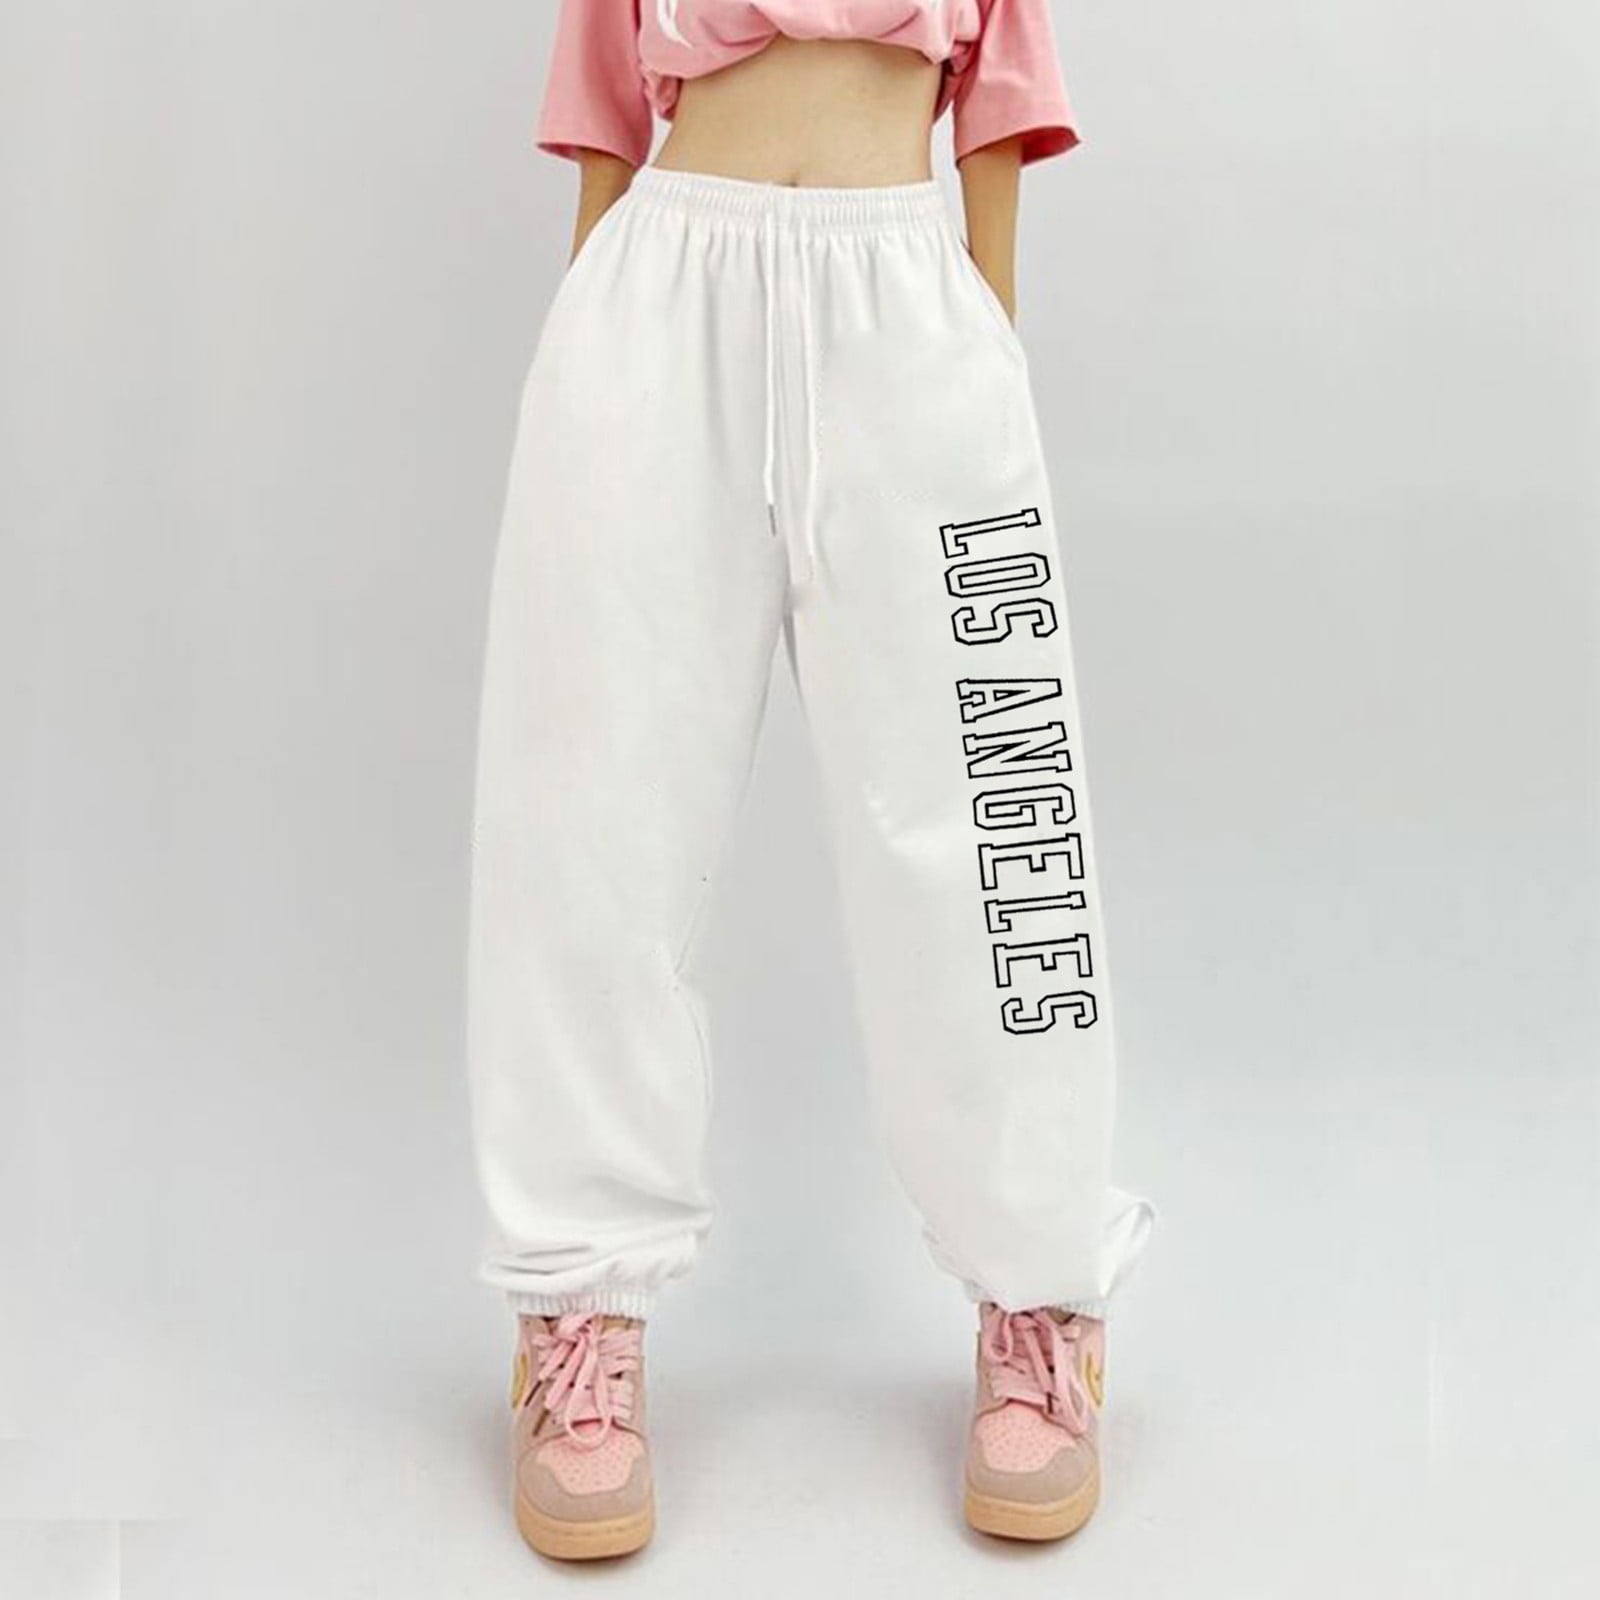 Karuedoo Women Fleece Warm Joggers Sweatpants High Waist Loose Baggy Hip  Hop Casual Sport Pants Streetwear Gray L 